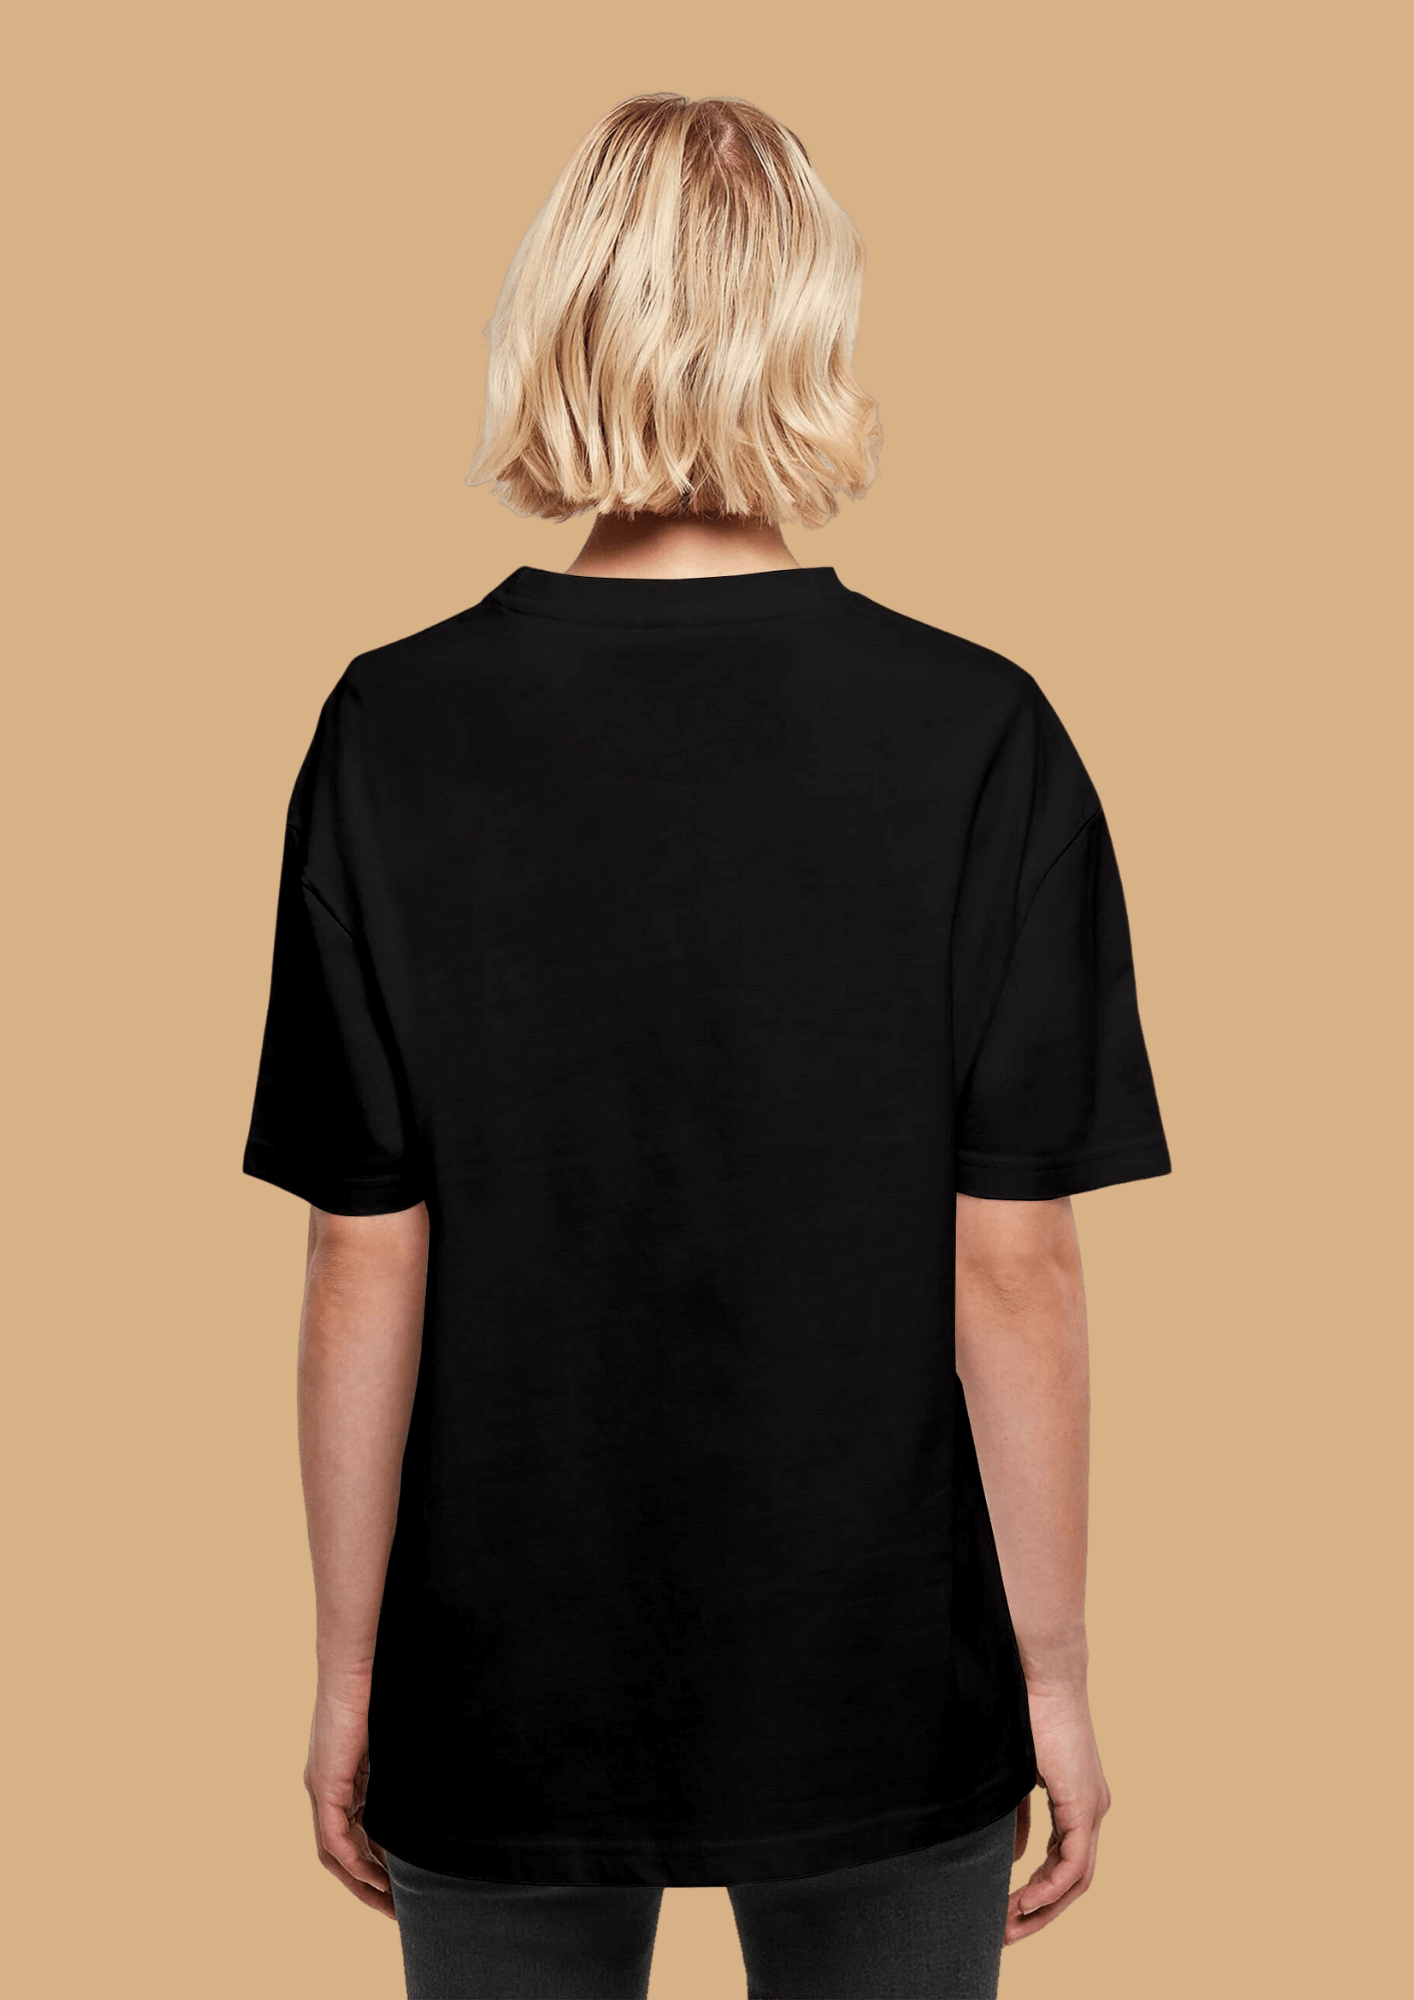 Virtue printed black color oversized t-shirt